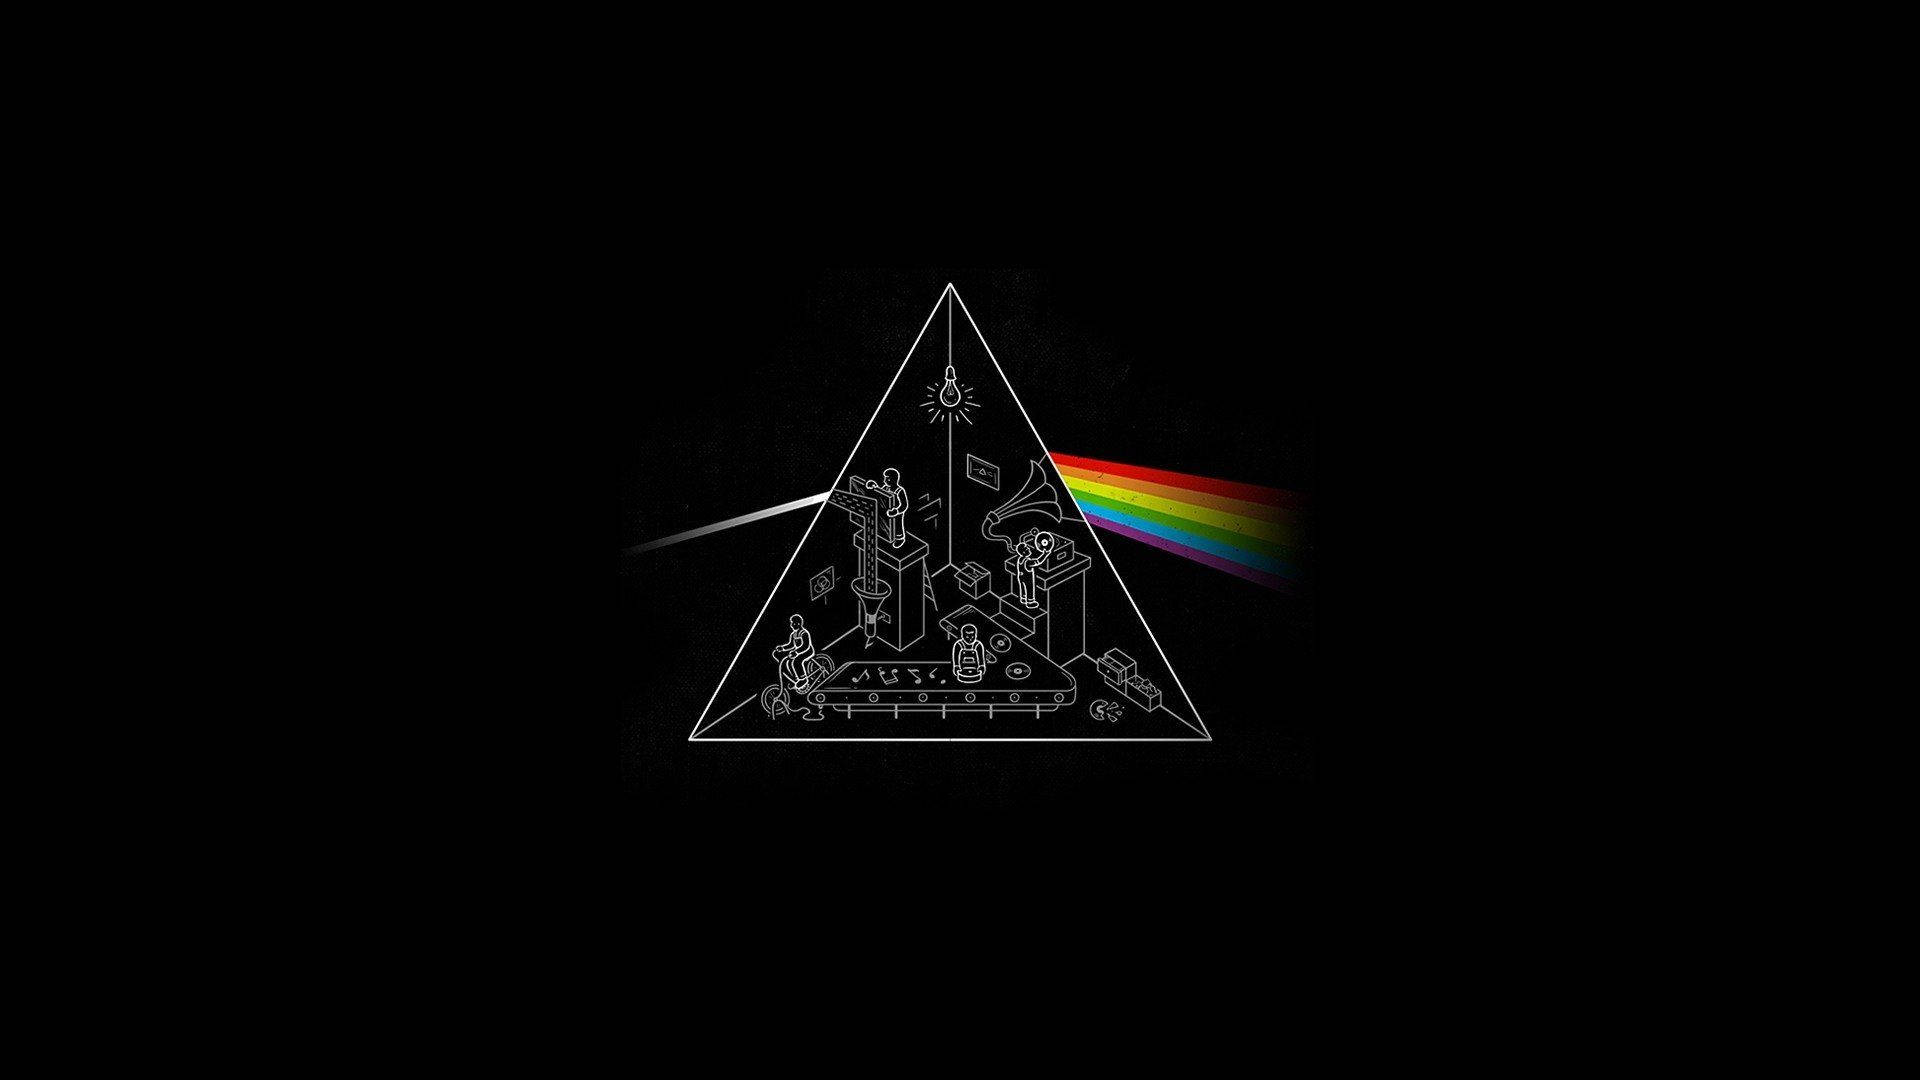 Pink Floyd - dark, surreal and powerful. Wallpaper